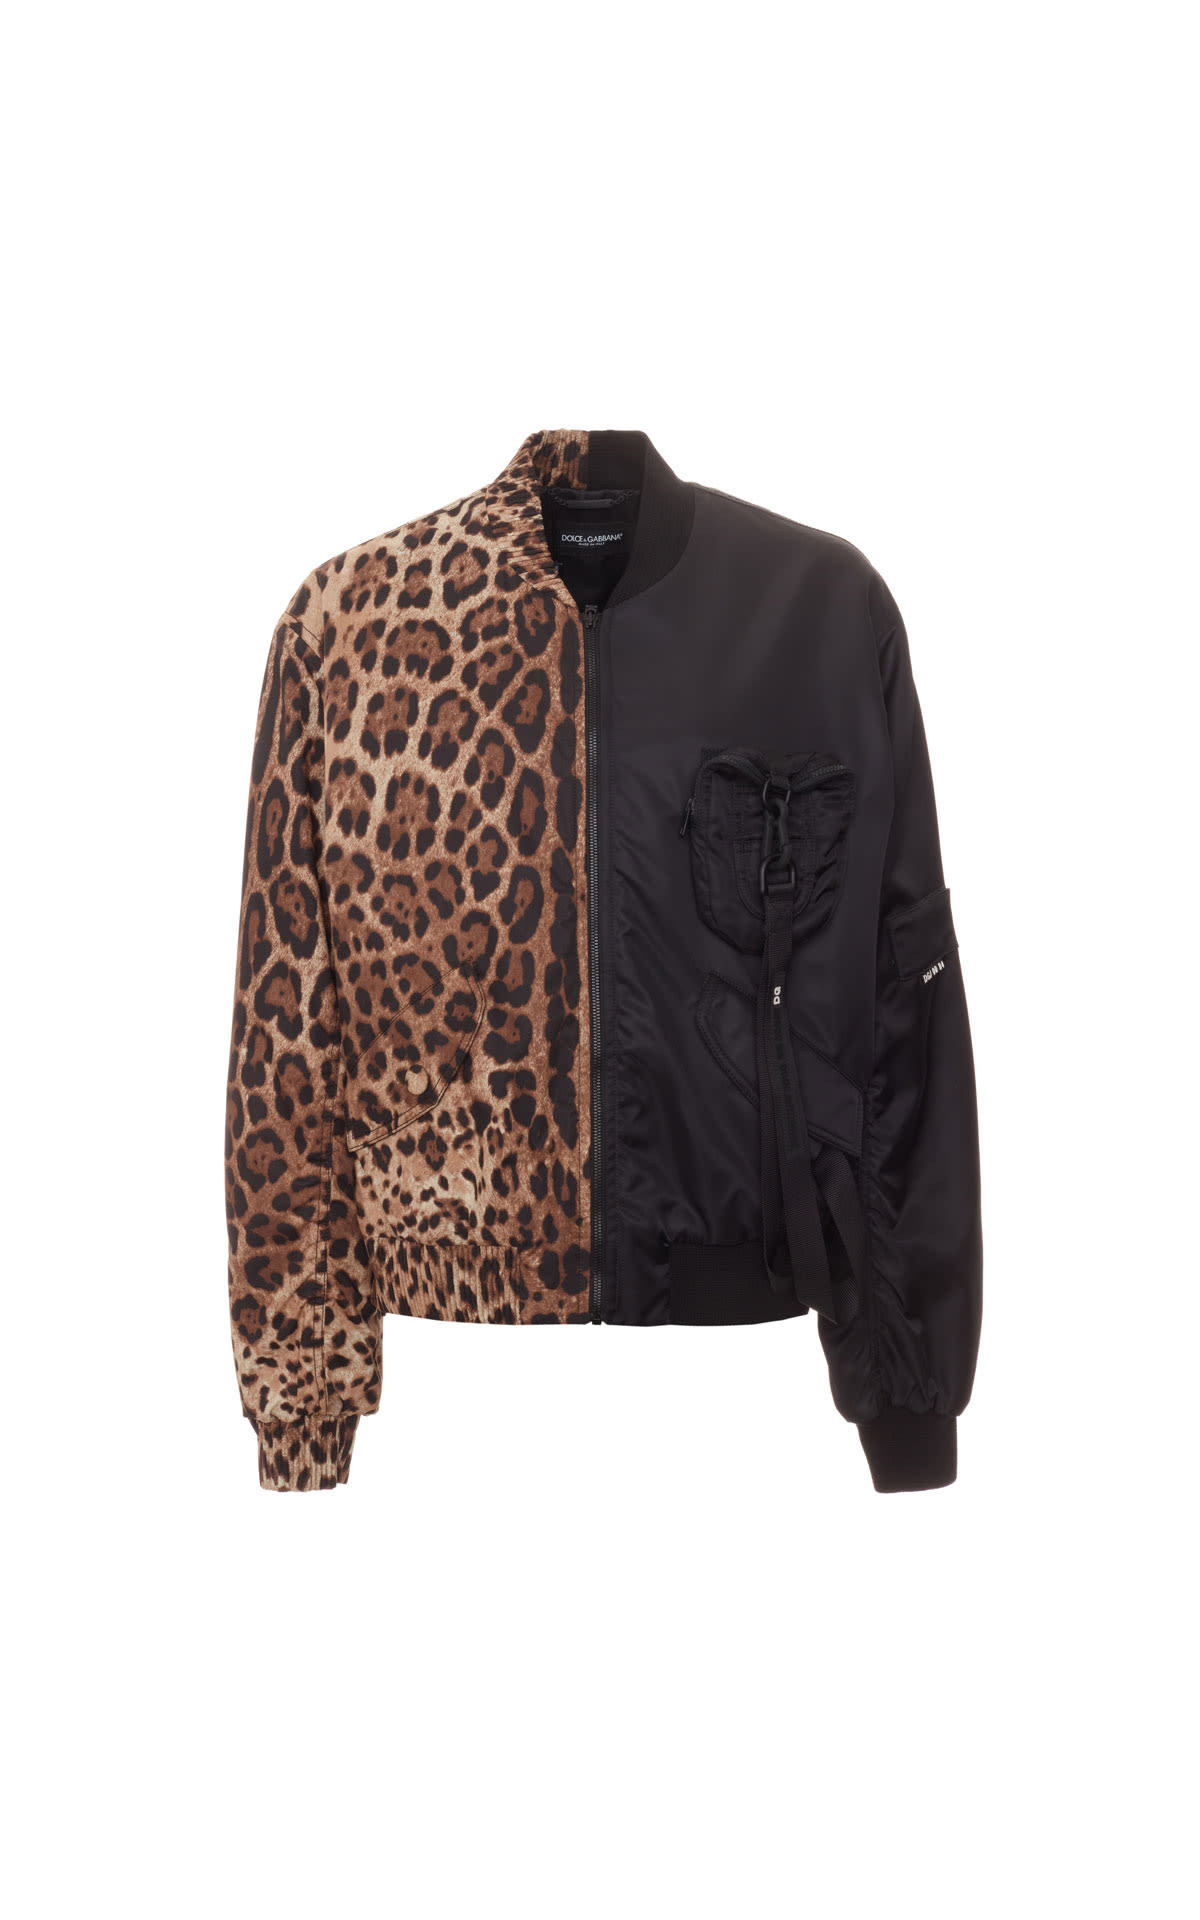 Dolce & Gabbana Leopard printed silk bomber jacket from Bicester Village